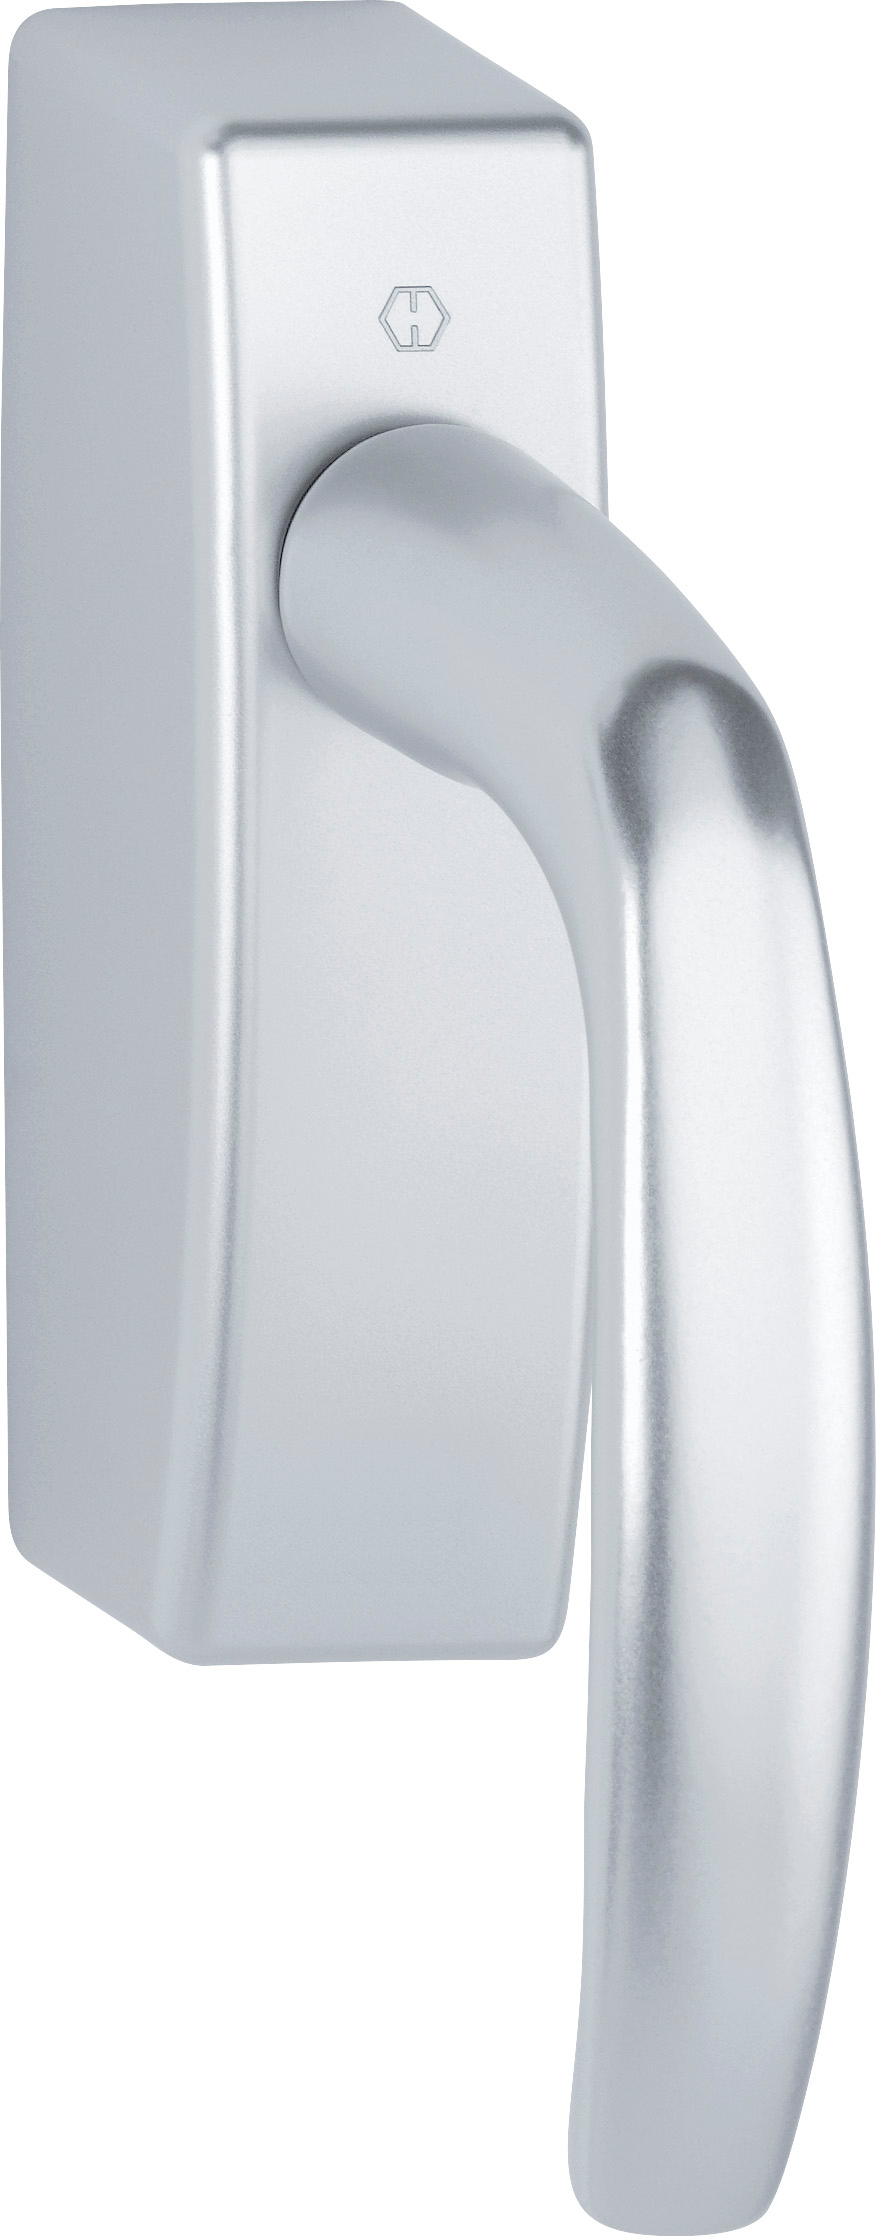 OPUS eWindow handgreep Atlanta aluminium zilver, 43 mm pin, bidirectioneel